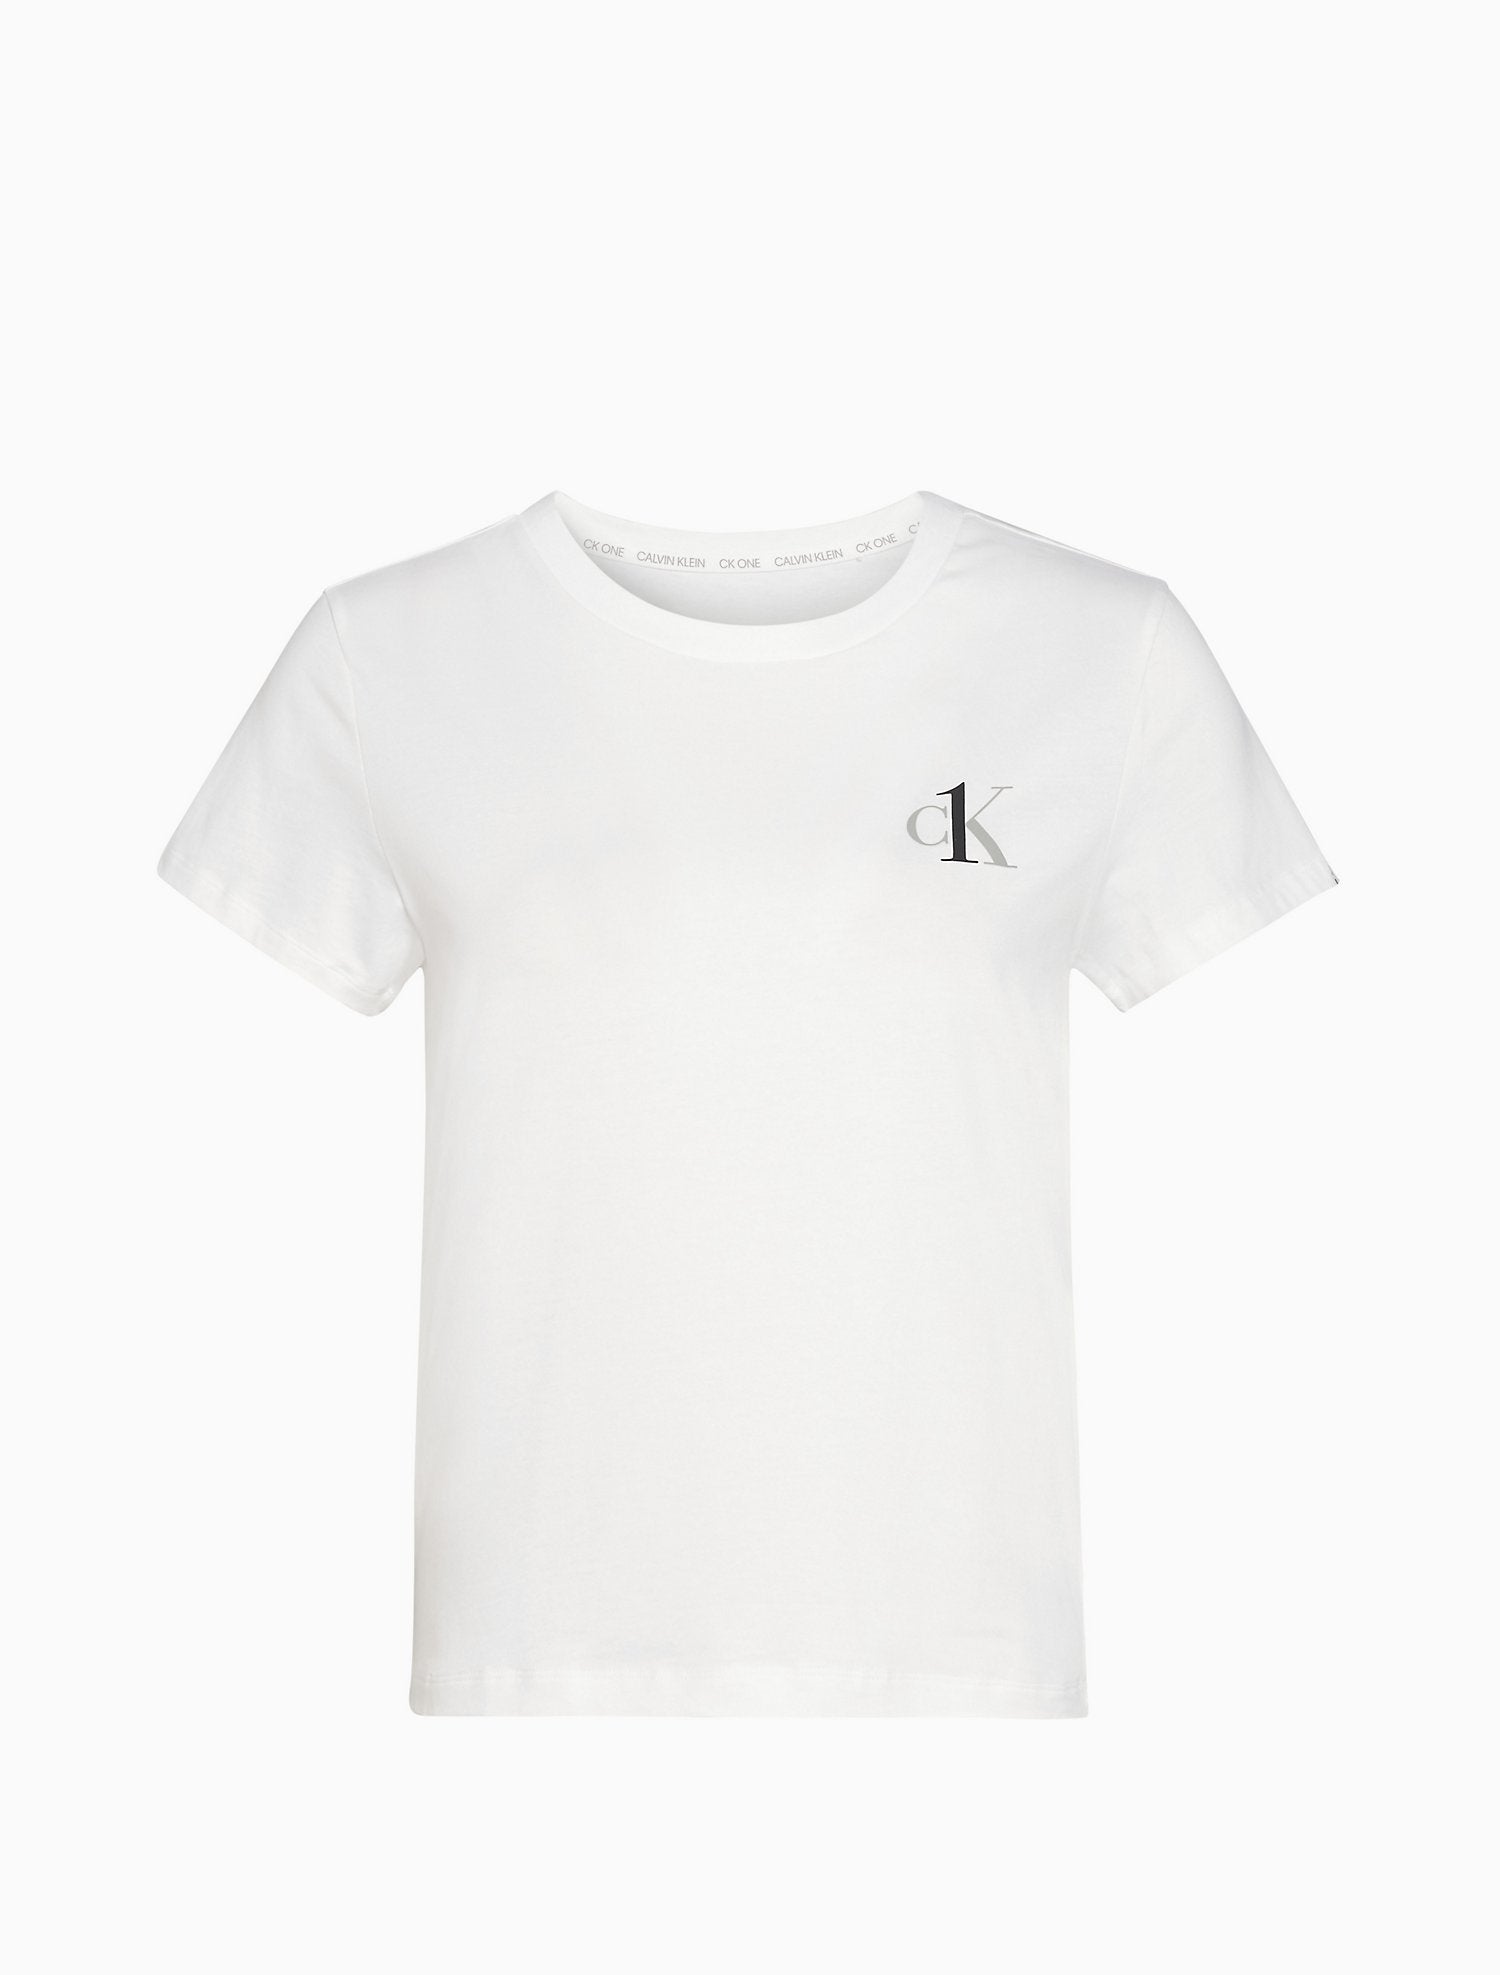 Calvin Klein CK ONE Crewneck Sleep T-Shirt - Women